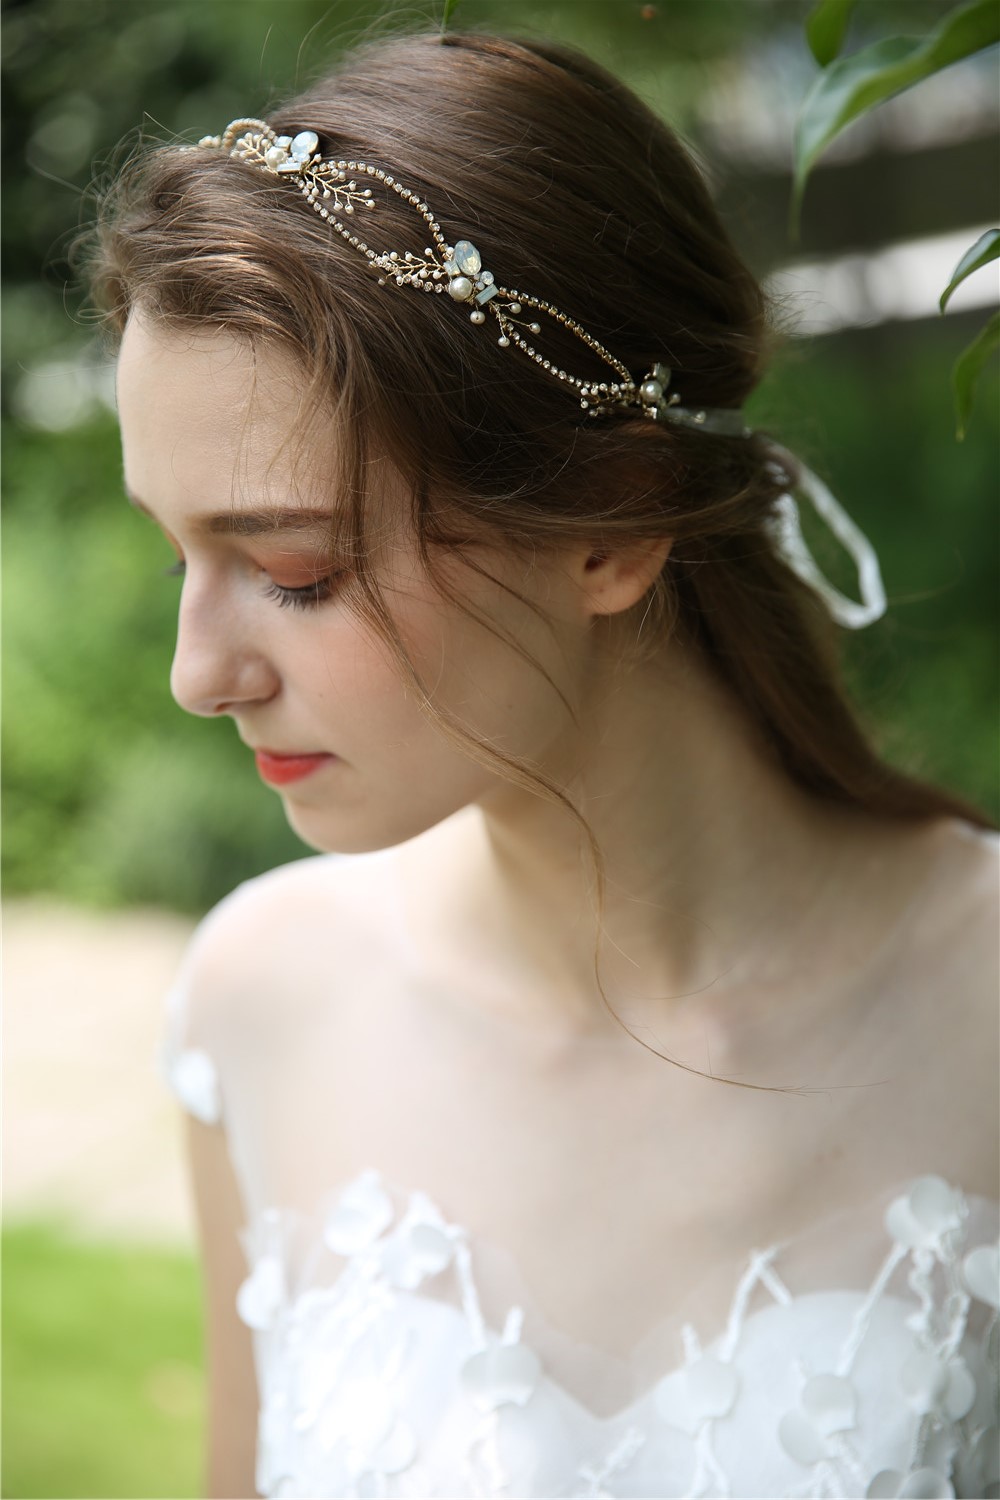 Beautiful Handmade Hair Vine Jewelry Crystal Headband Bridal Wedding Tiara Headpiece For Girl